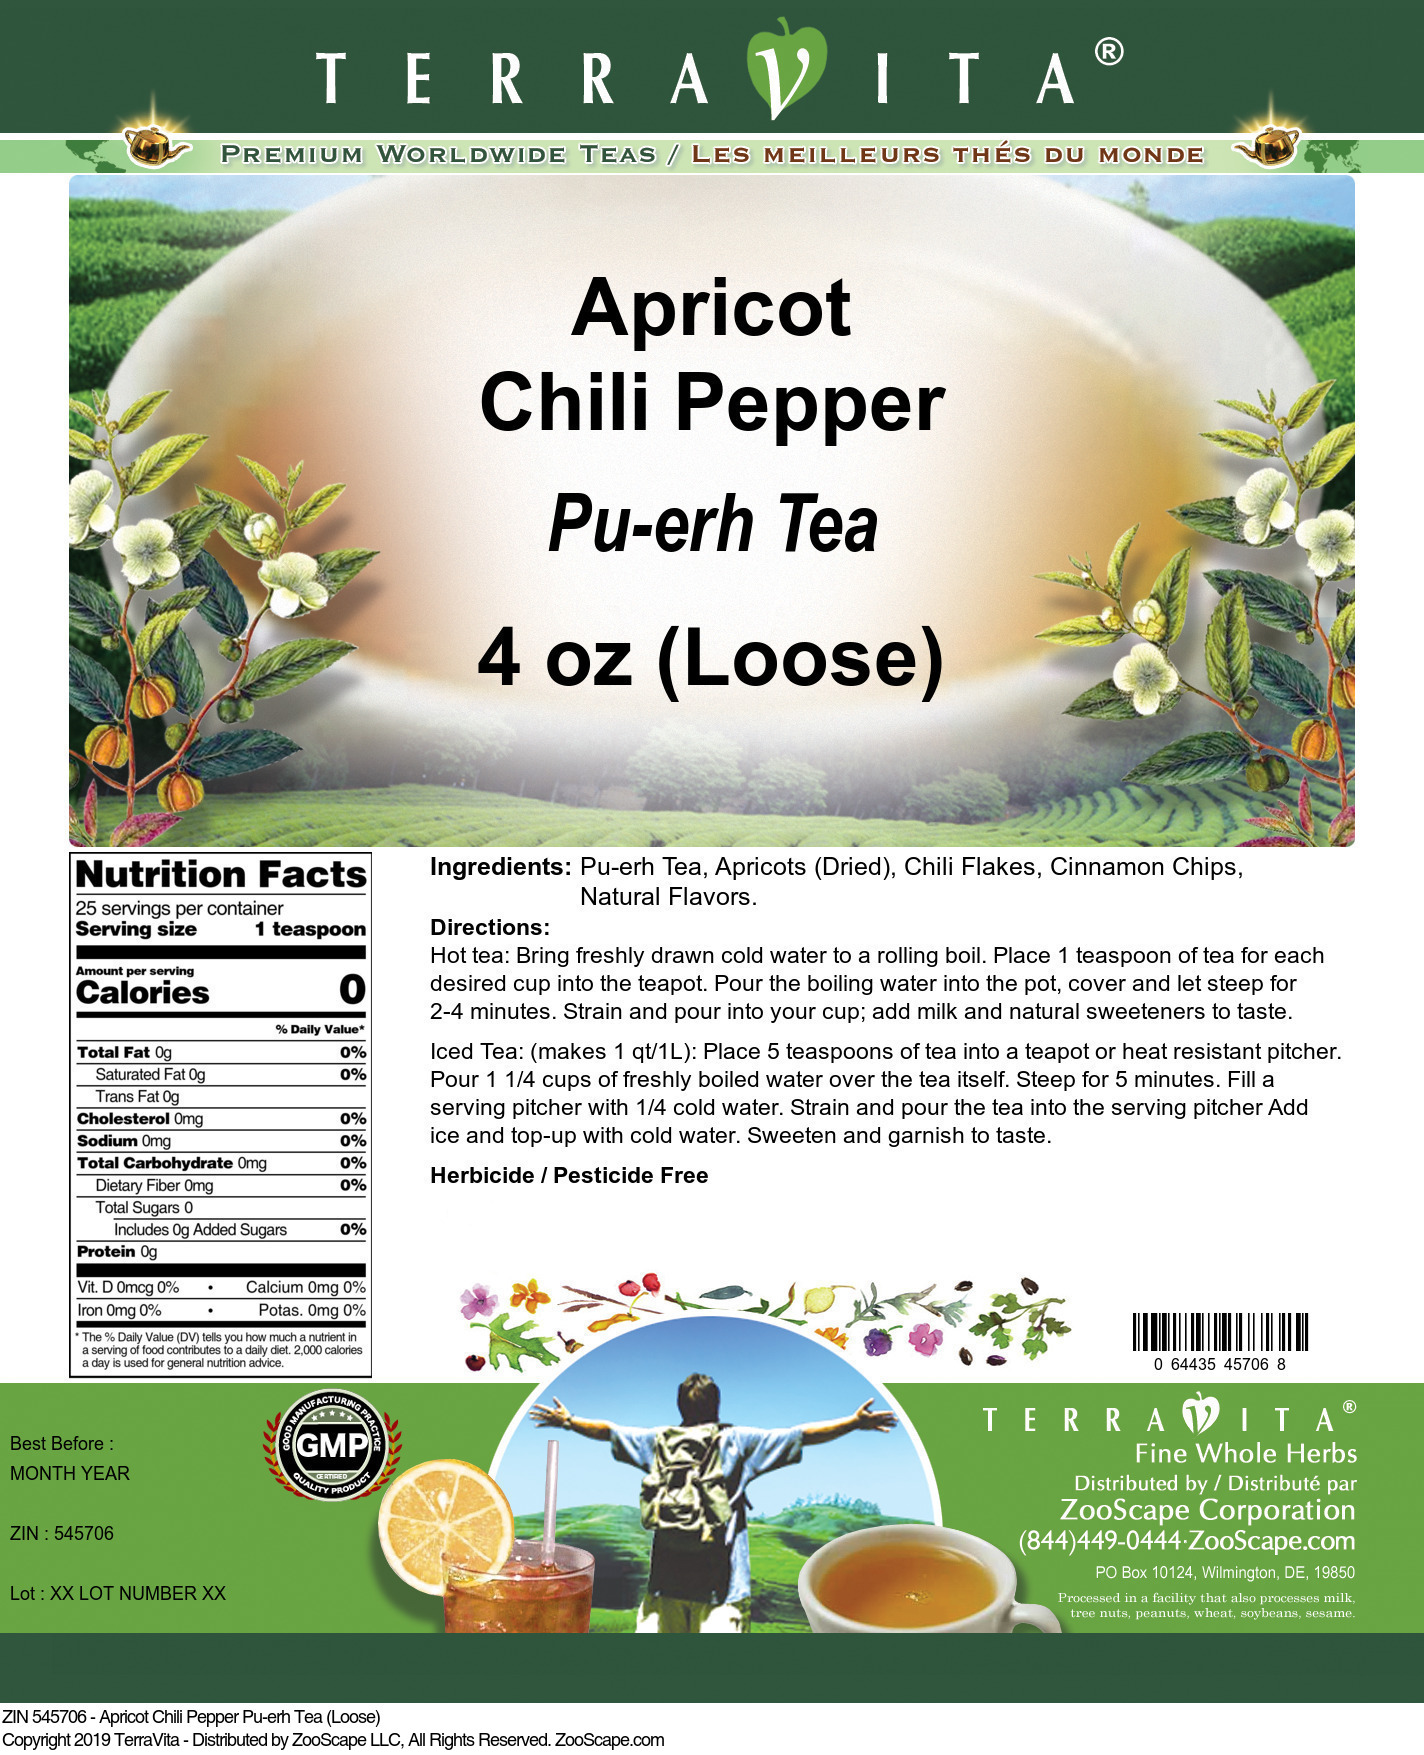 Apricot Chili Pepper Pu-erh Tea (Loose) - Label